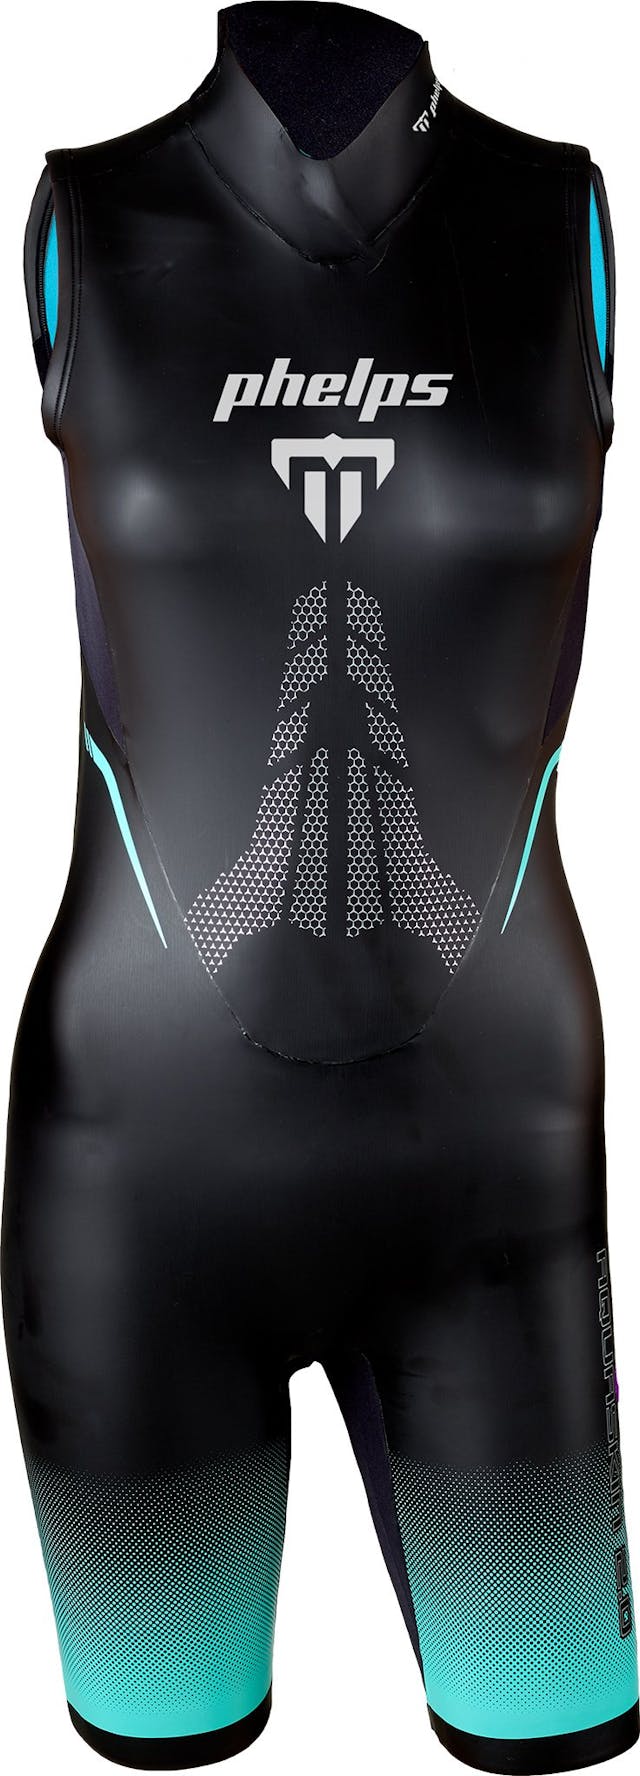 Product image for Aquaskin Triathlon Shorty - Women's